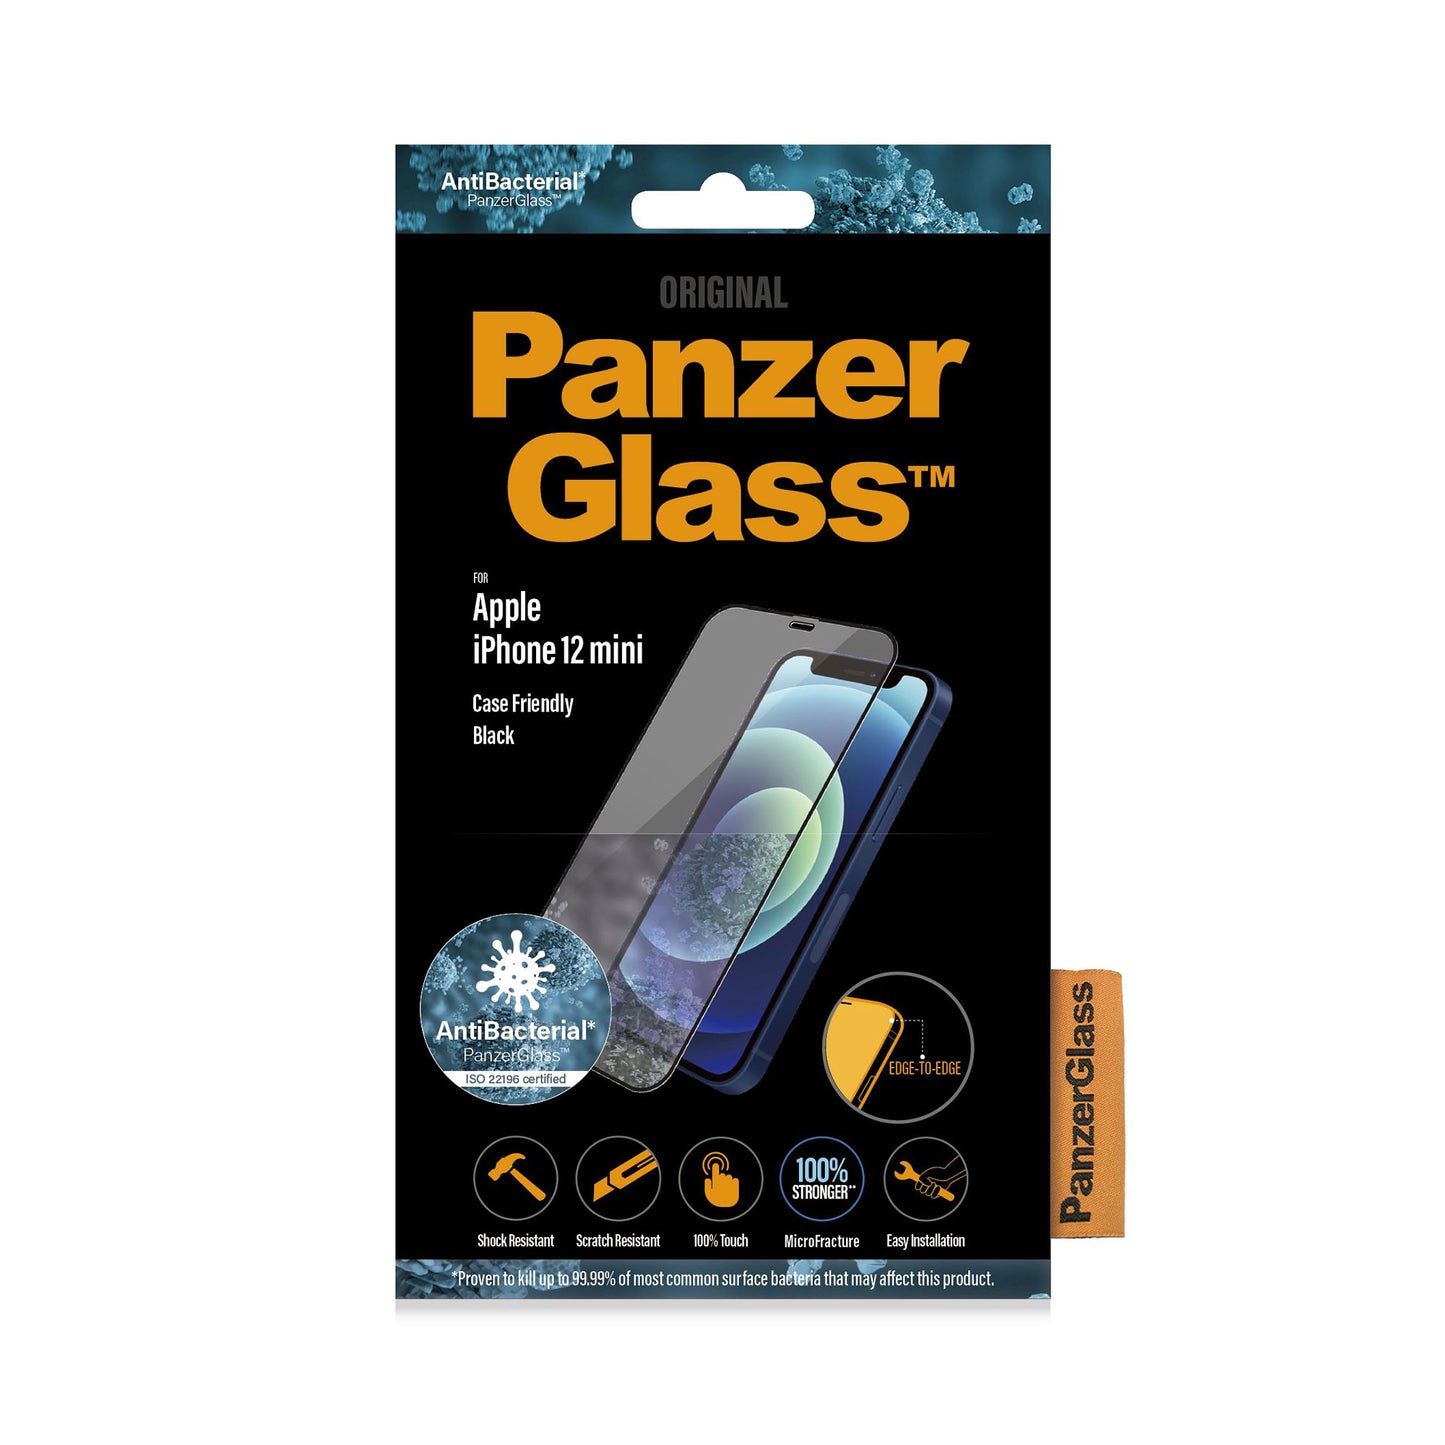 PANZERGLASS Case Friendly Black for iPhone 12 mini - Clear